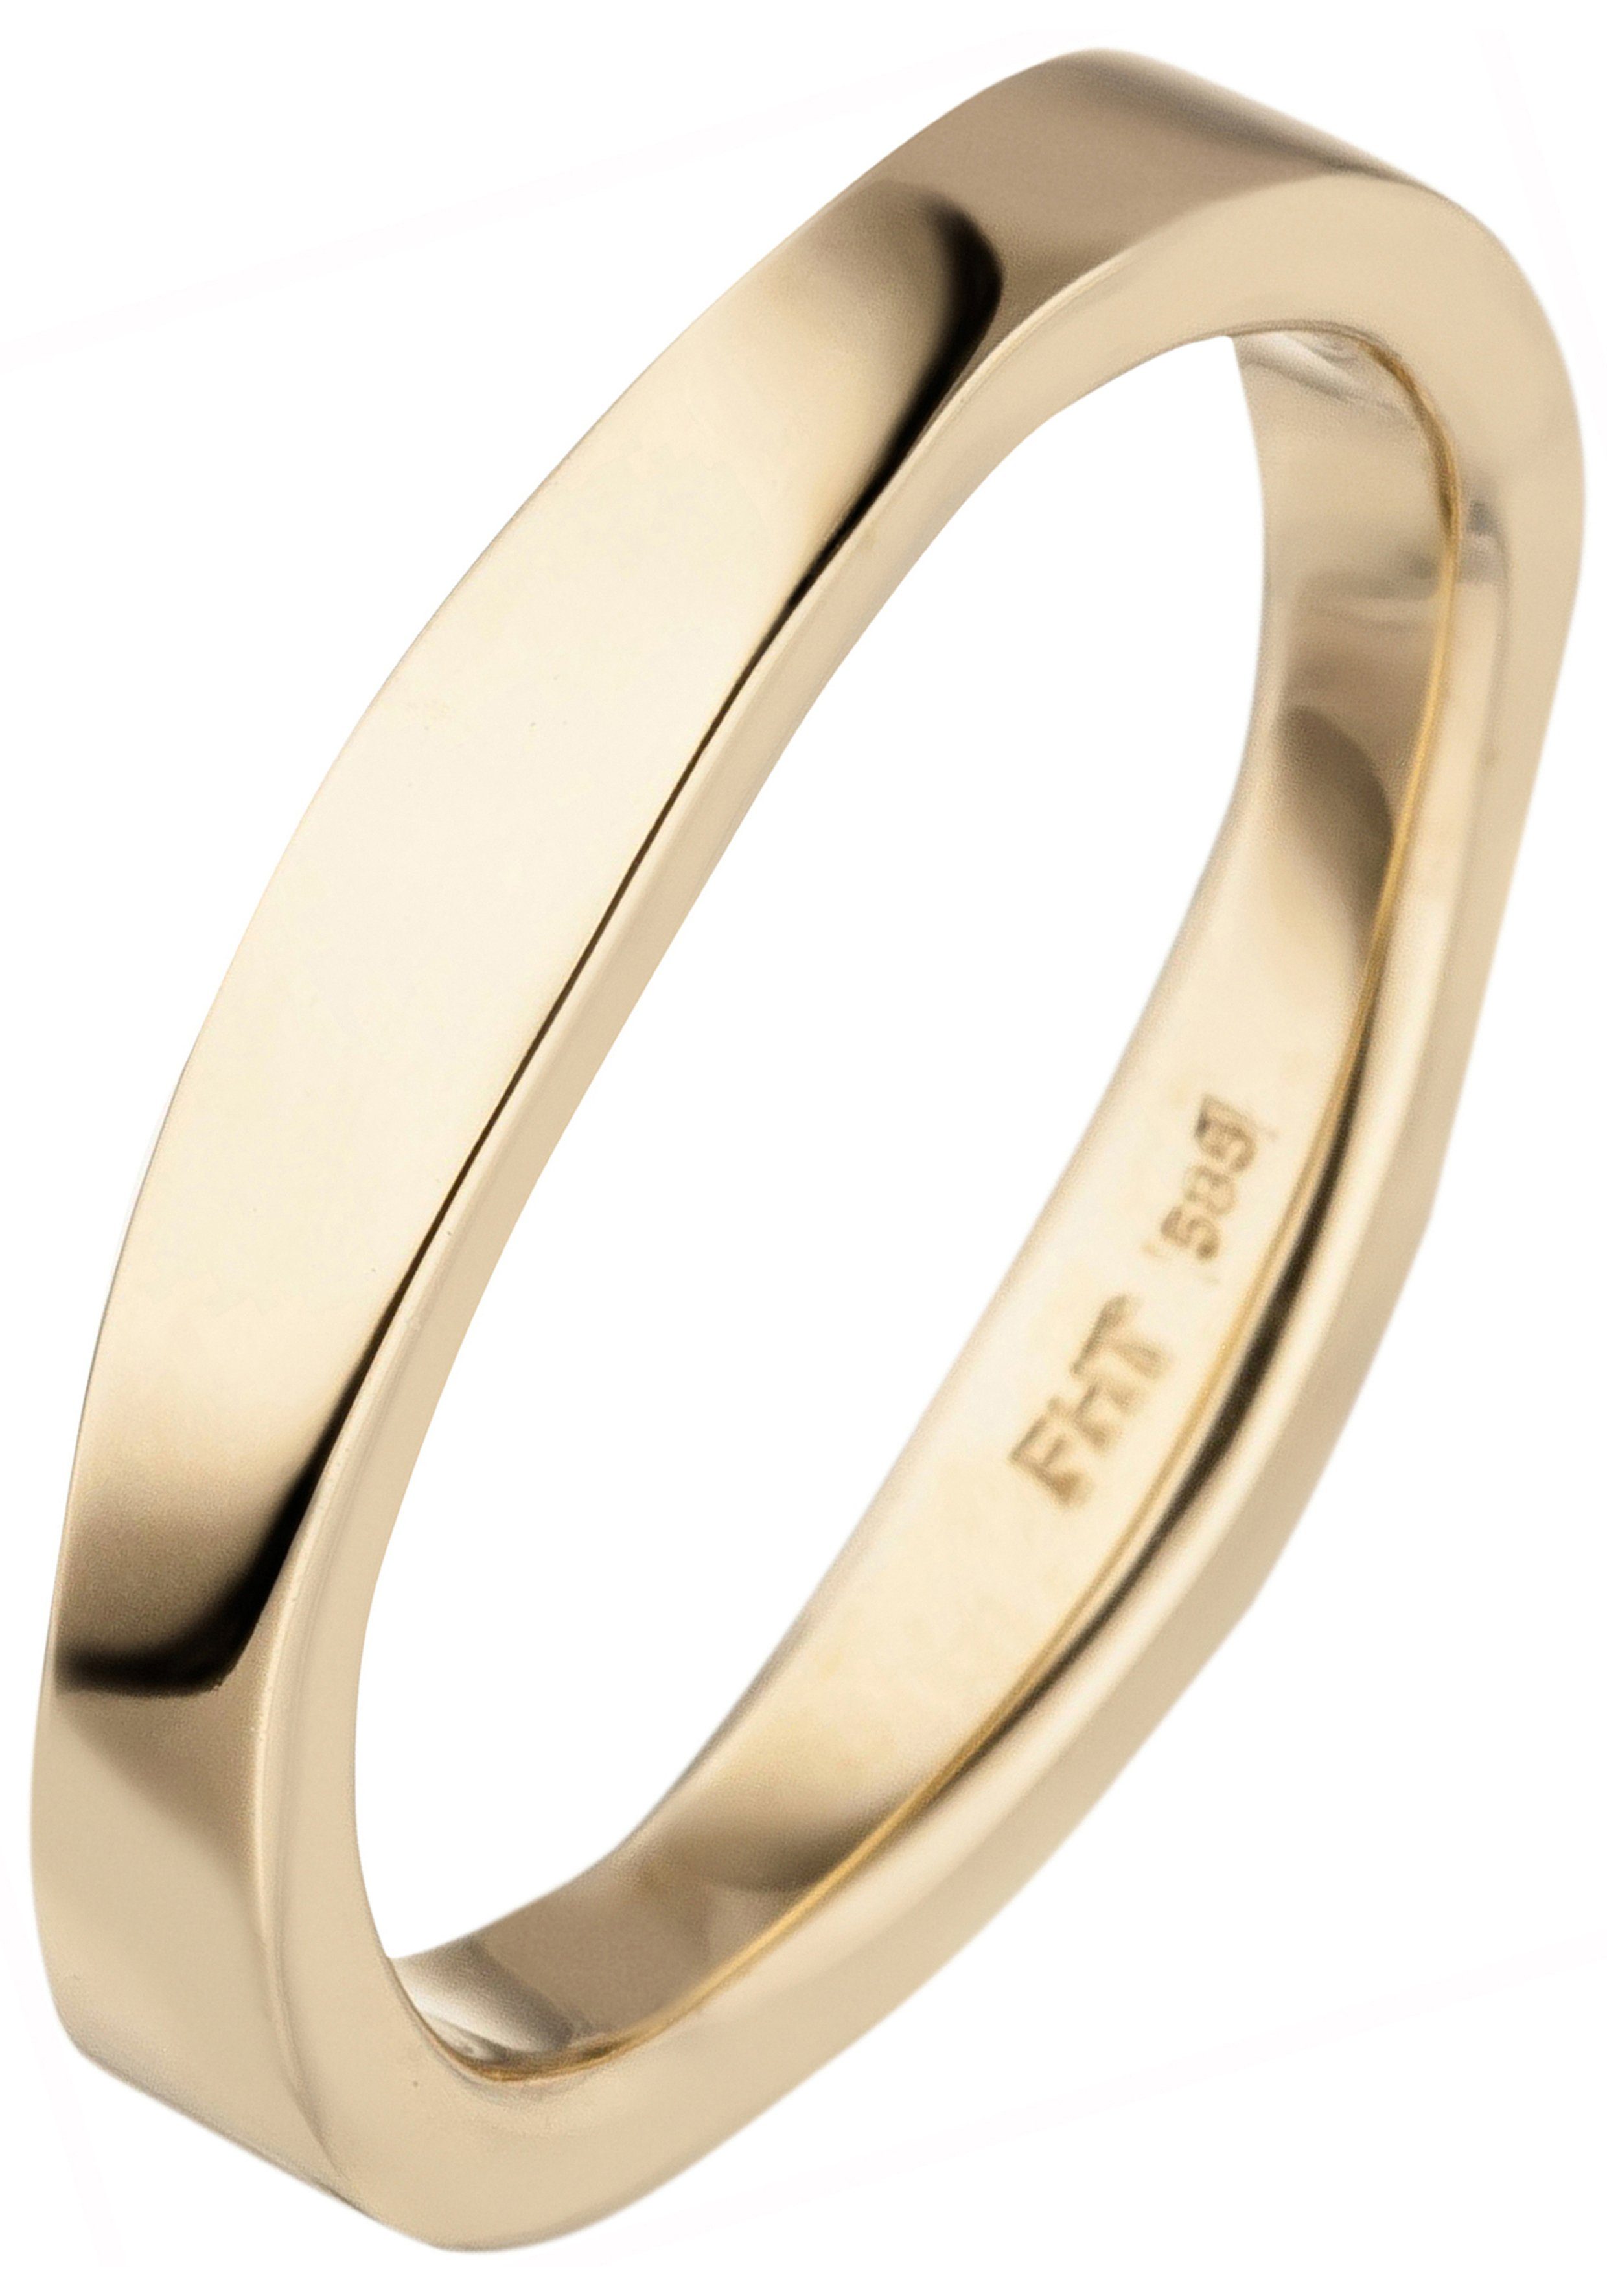 JOBO Fingerring, 585 Gold, Juwelierqualität der Marke JOBO